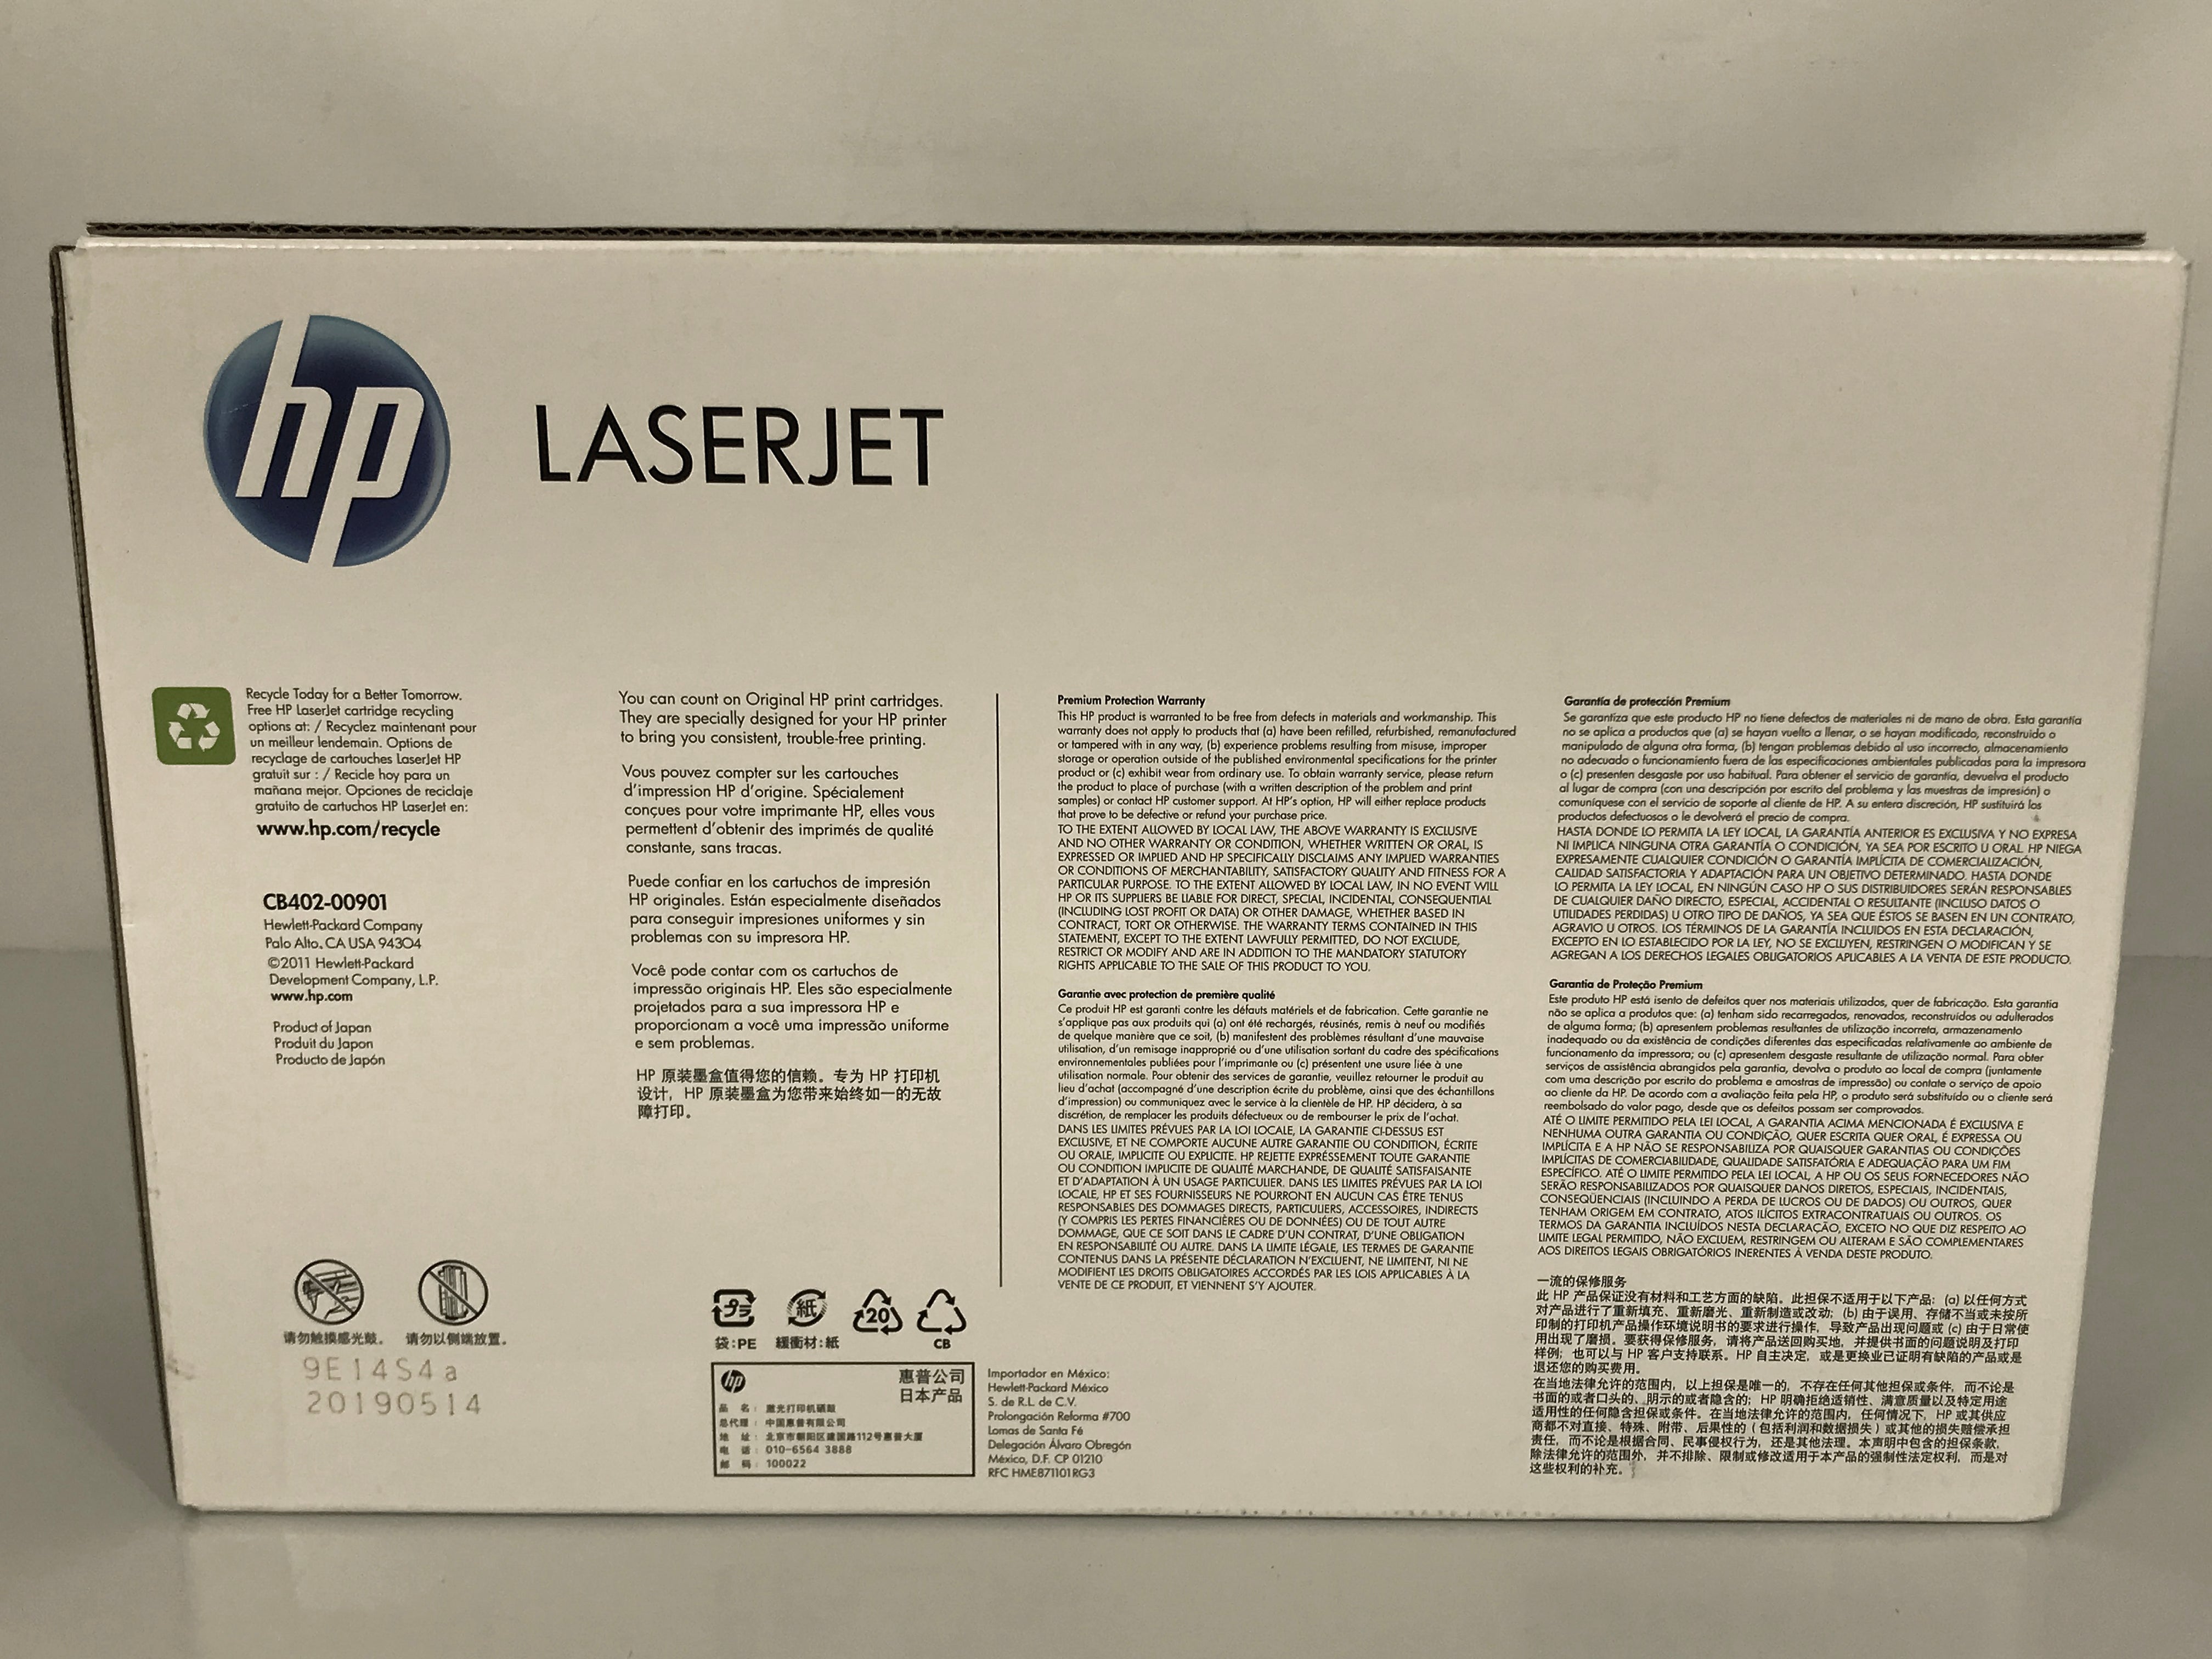 HP LaserJet 642A CB402A Yellow Toner Cartridge